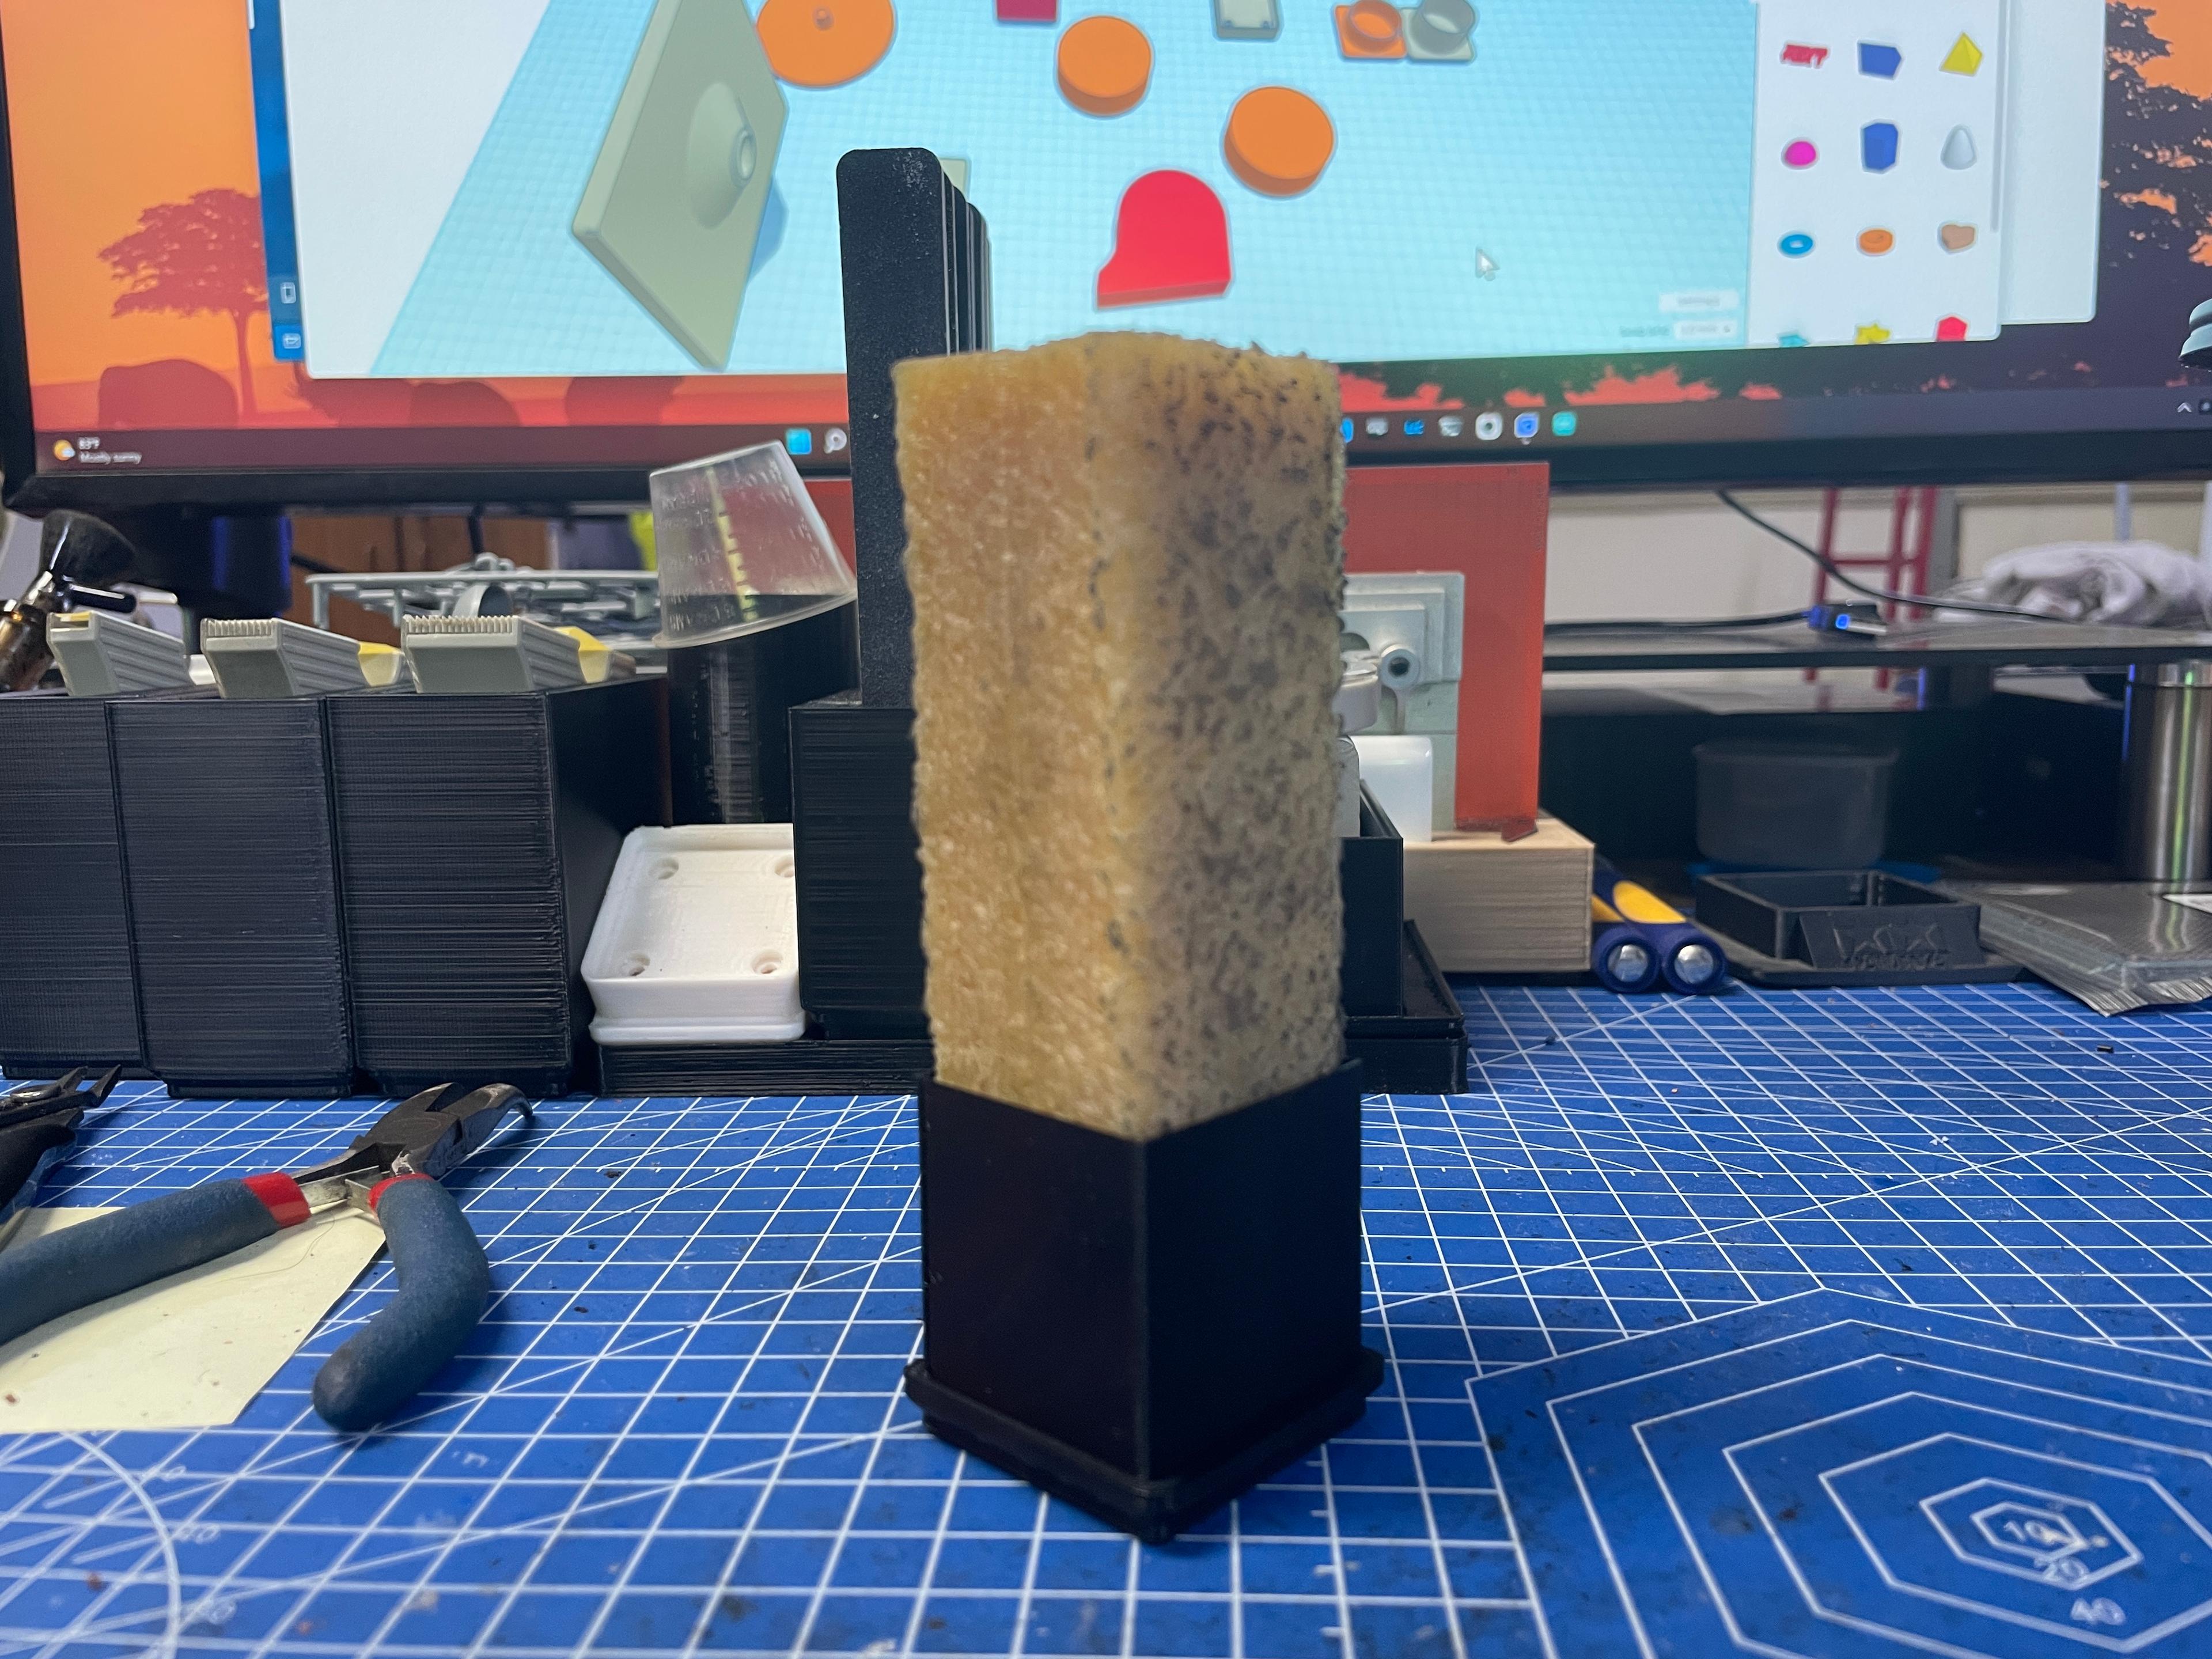 Gridfinity Sanding Eraser Holder 1x1 3d model